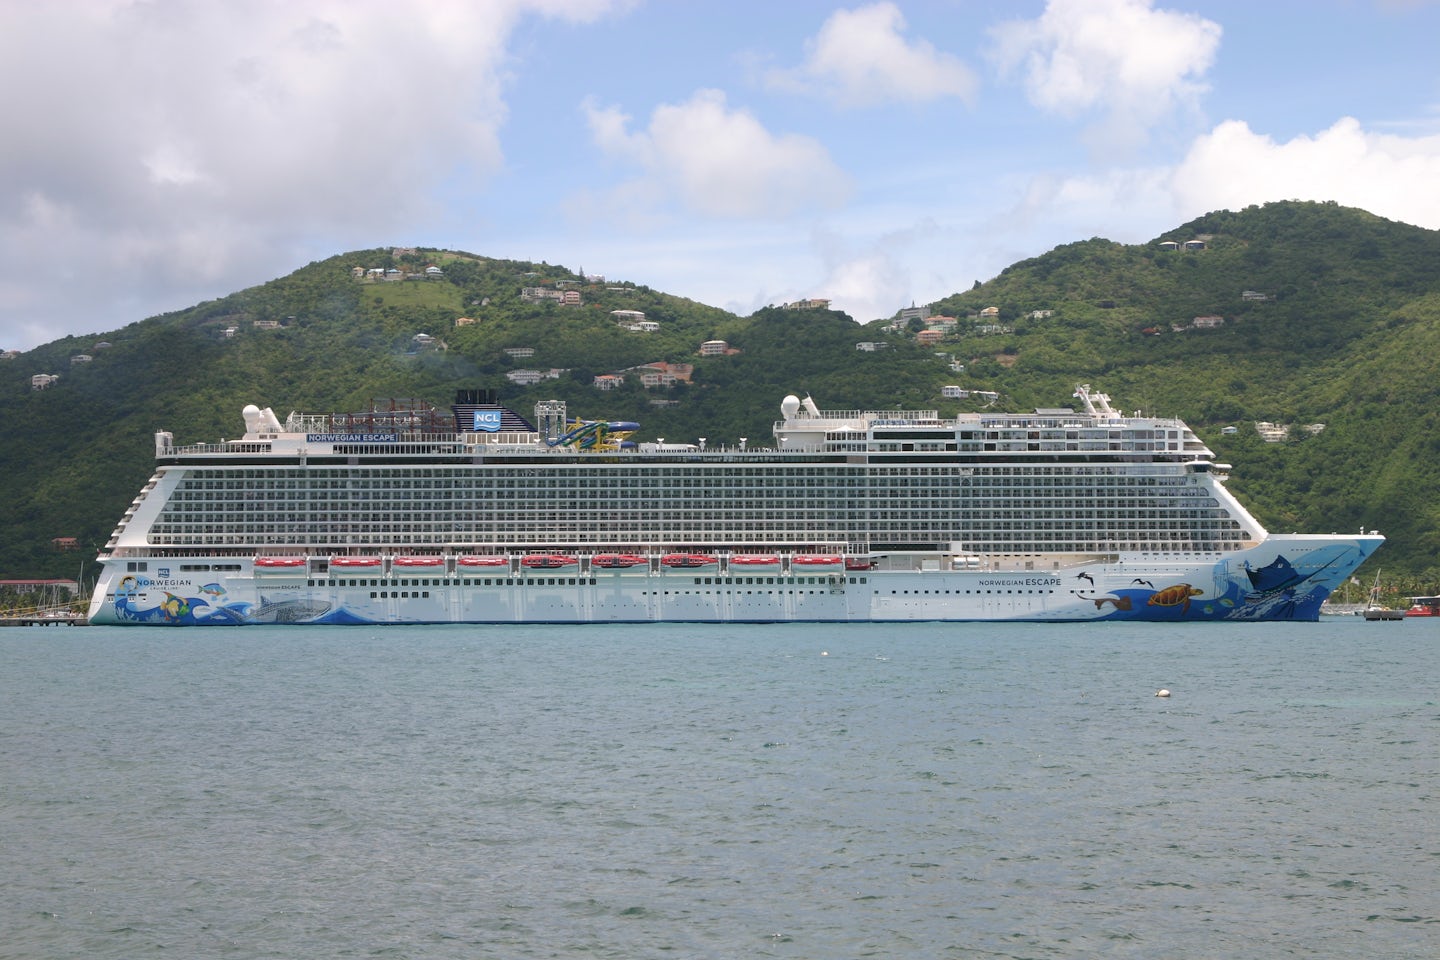 Escape docked at Tortola